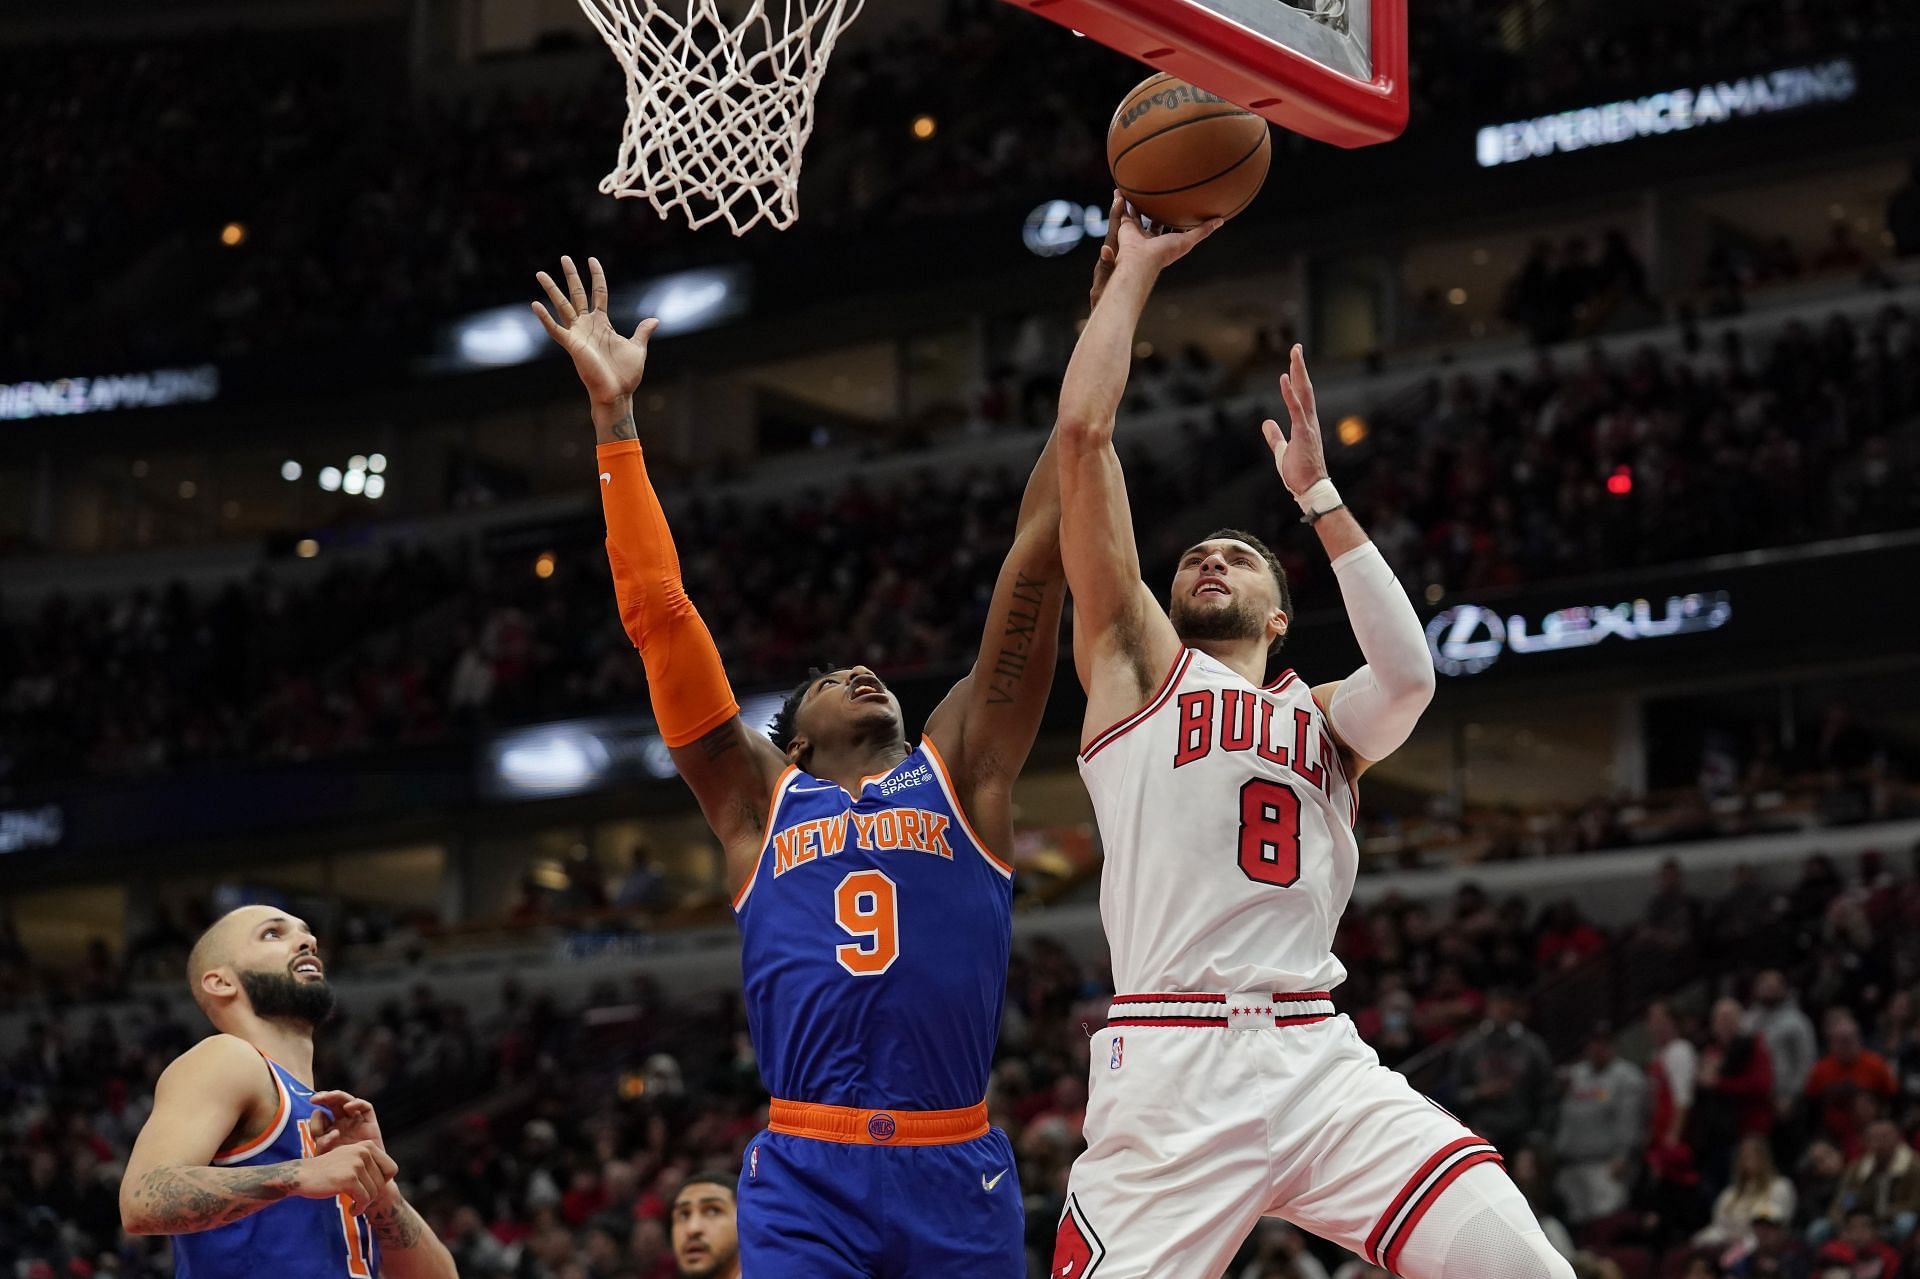 The New York Knicks will host the Chicago Bulls on Mar. 28.